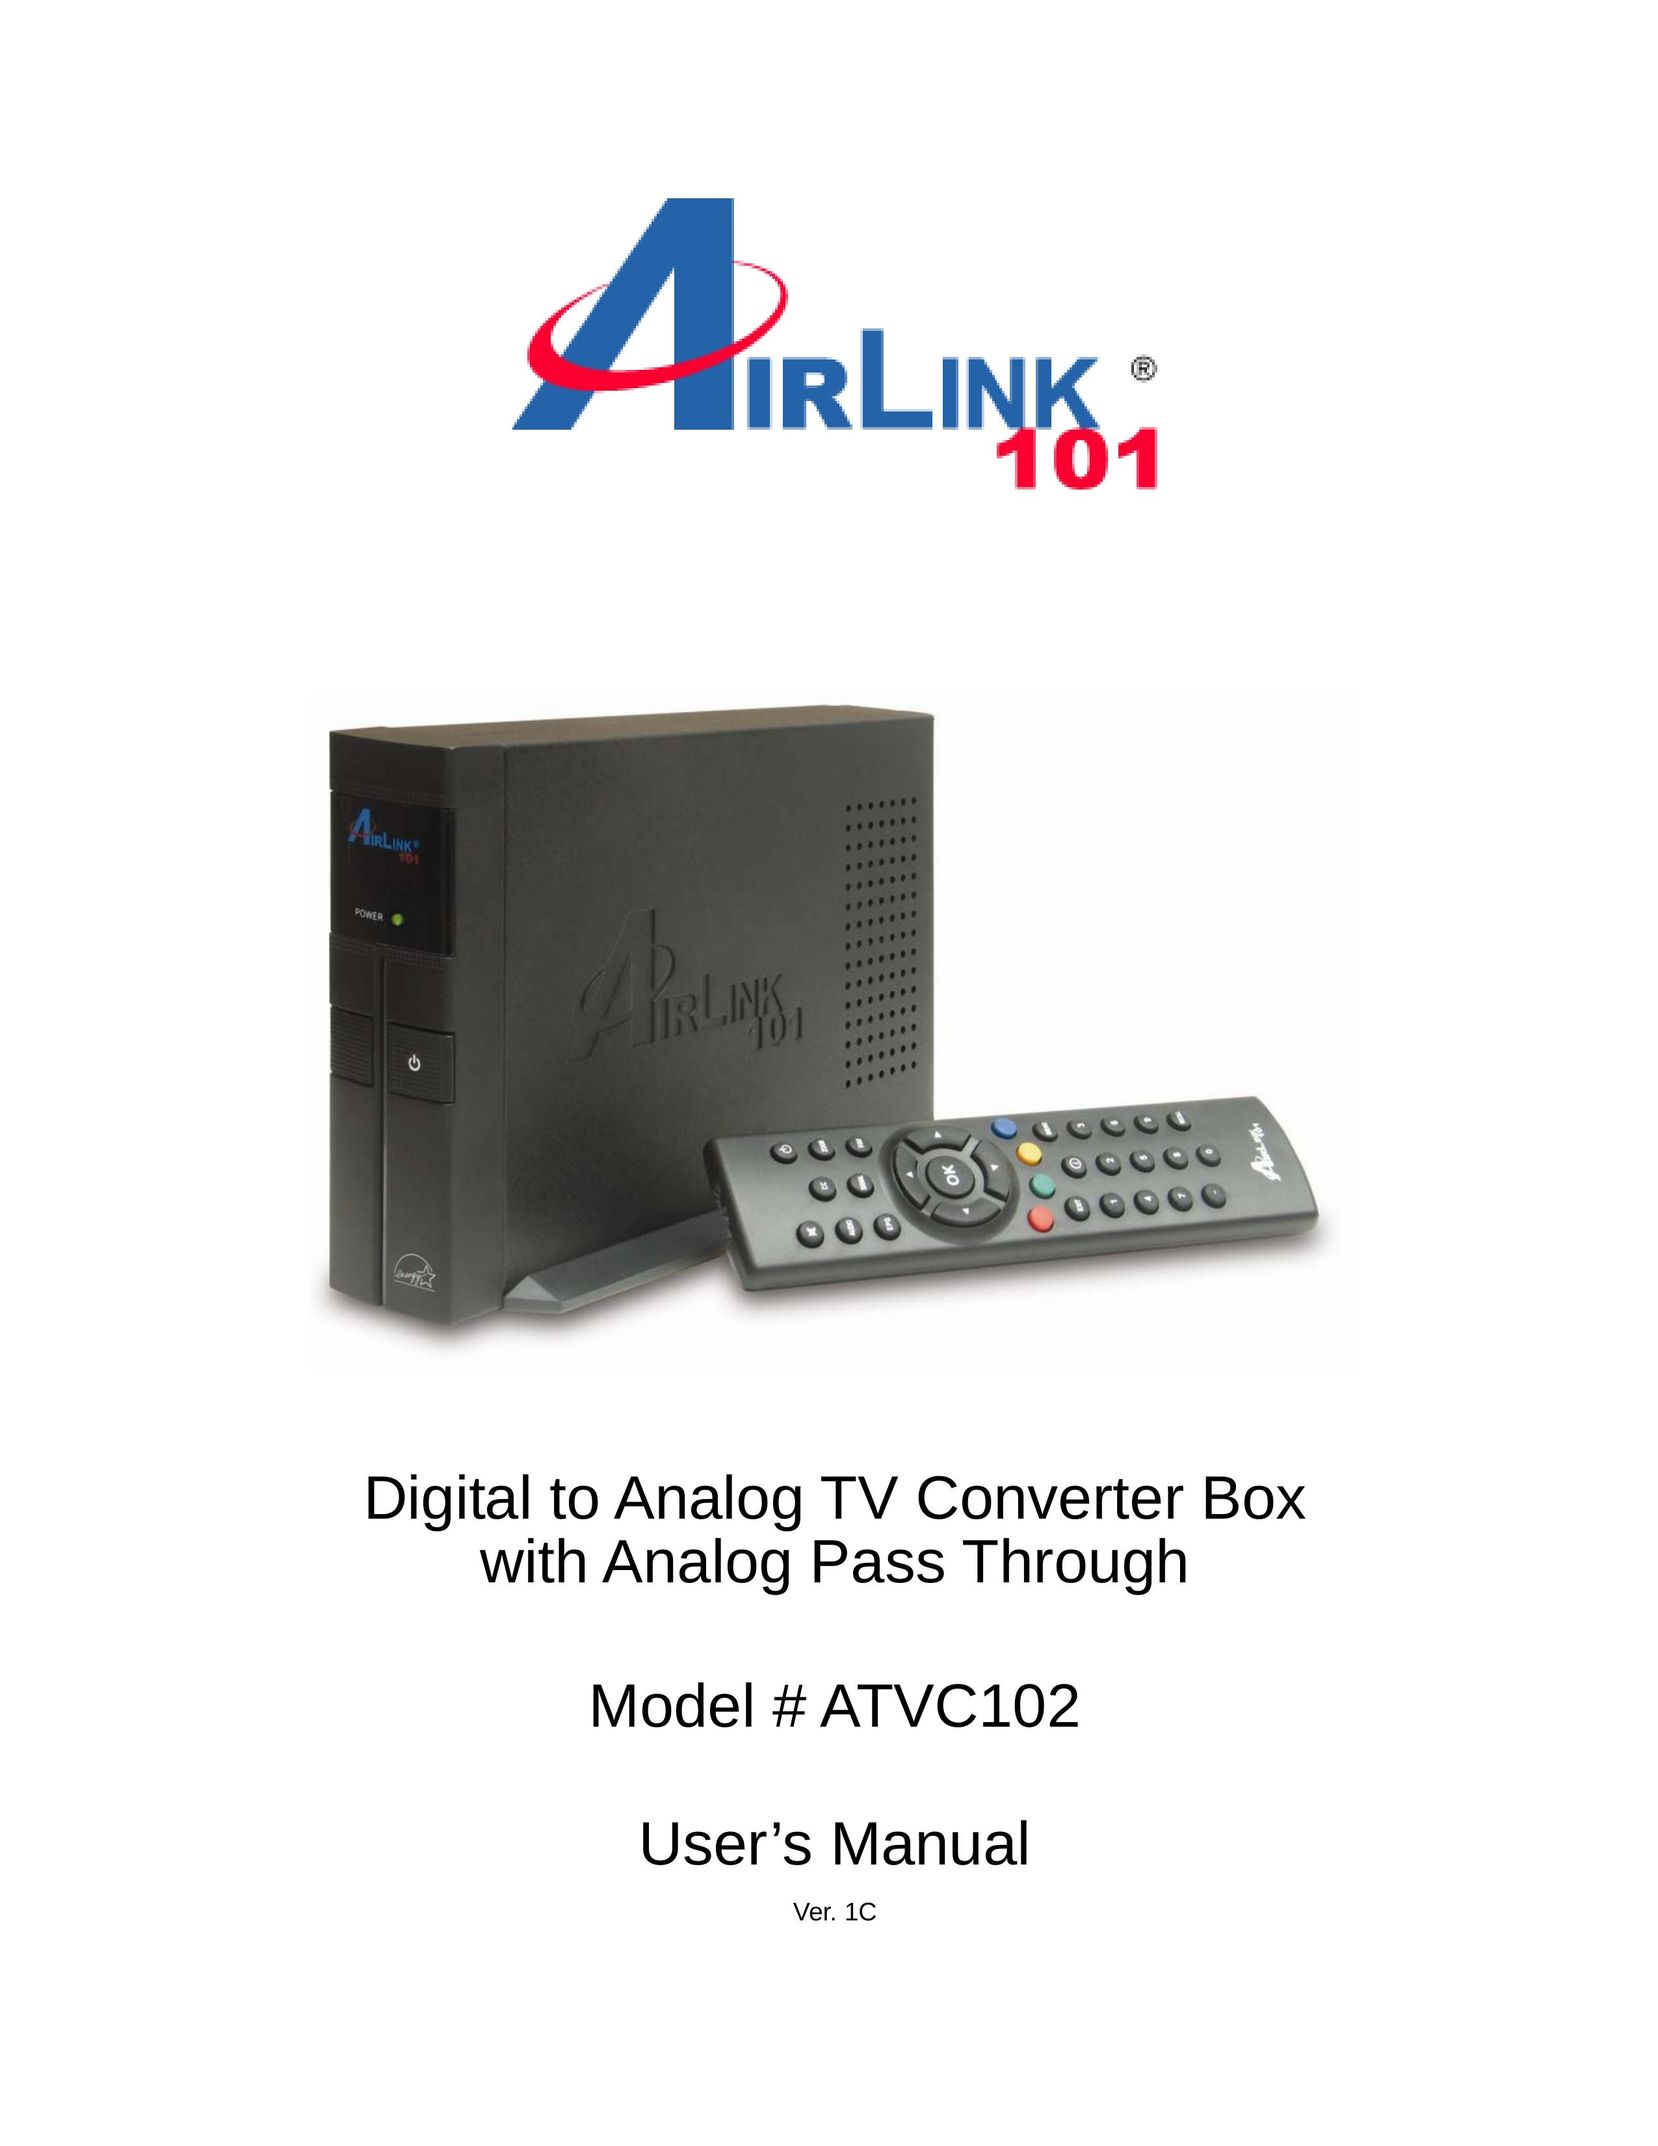 Airlink101 ATVC102 TV Converter Box User Manual